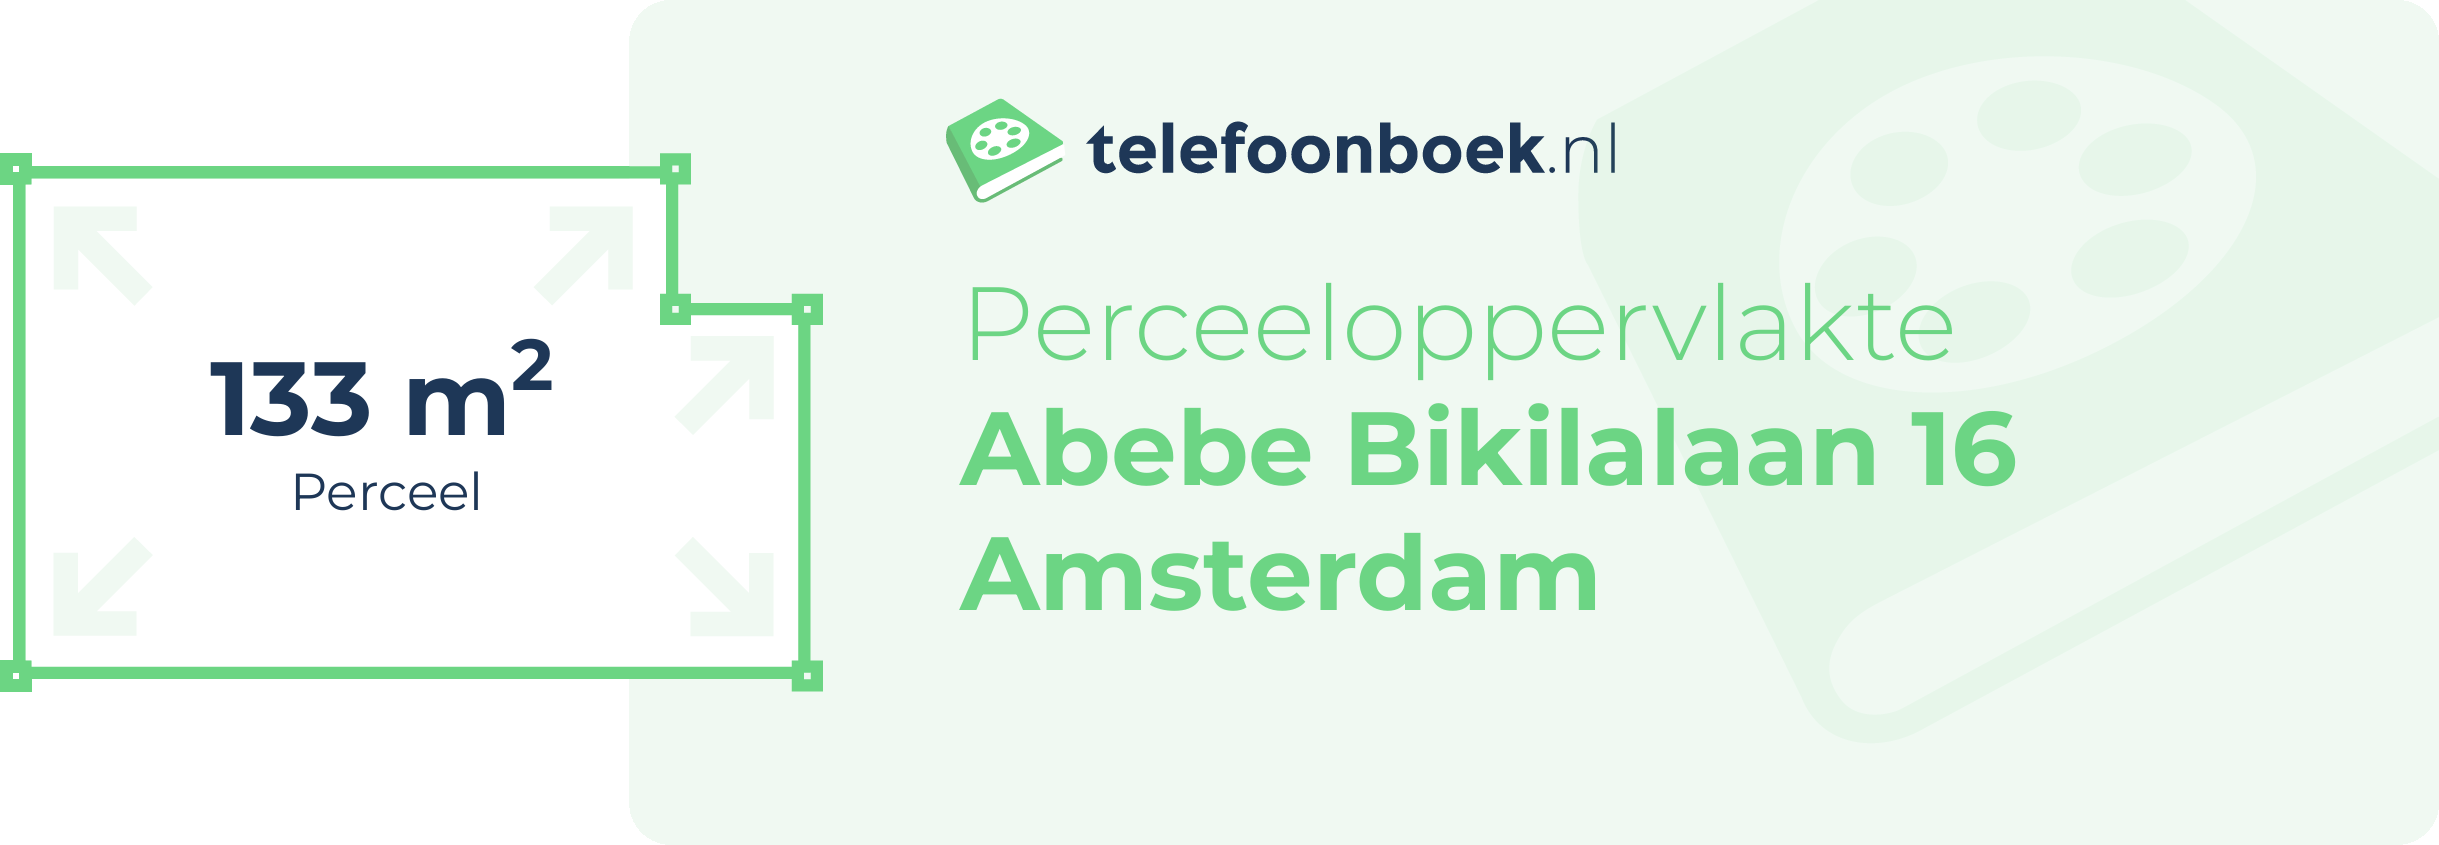 Perceeloppervlakte Abebe Bikilalaan 16 Amsterdam